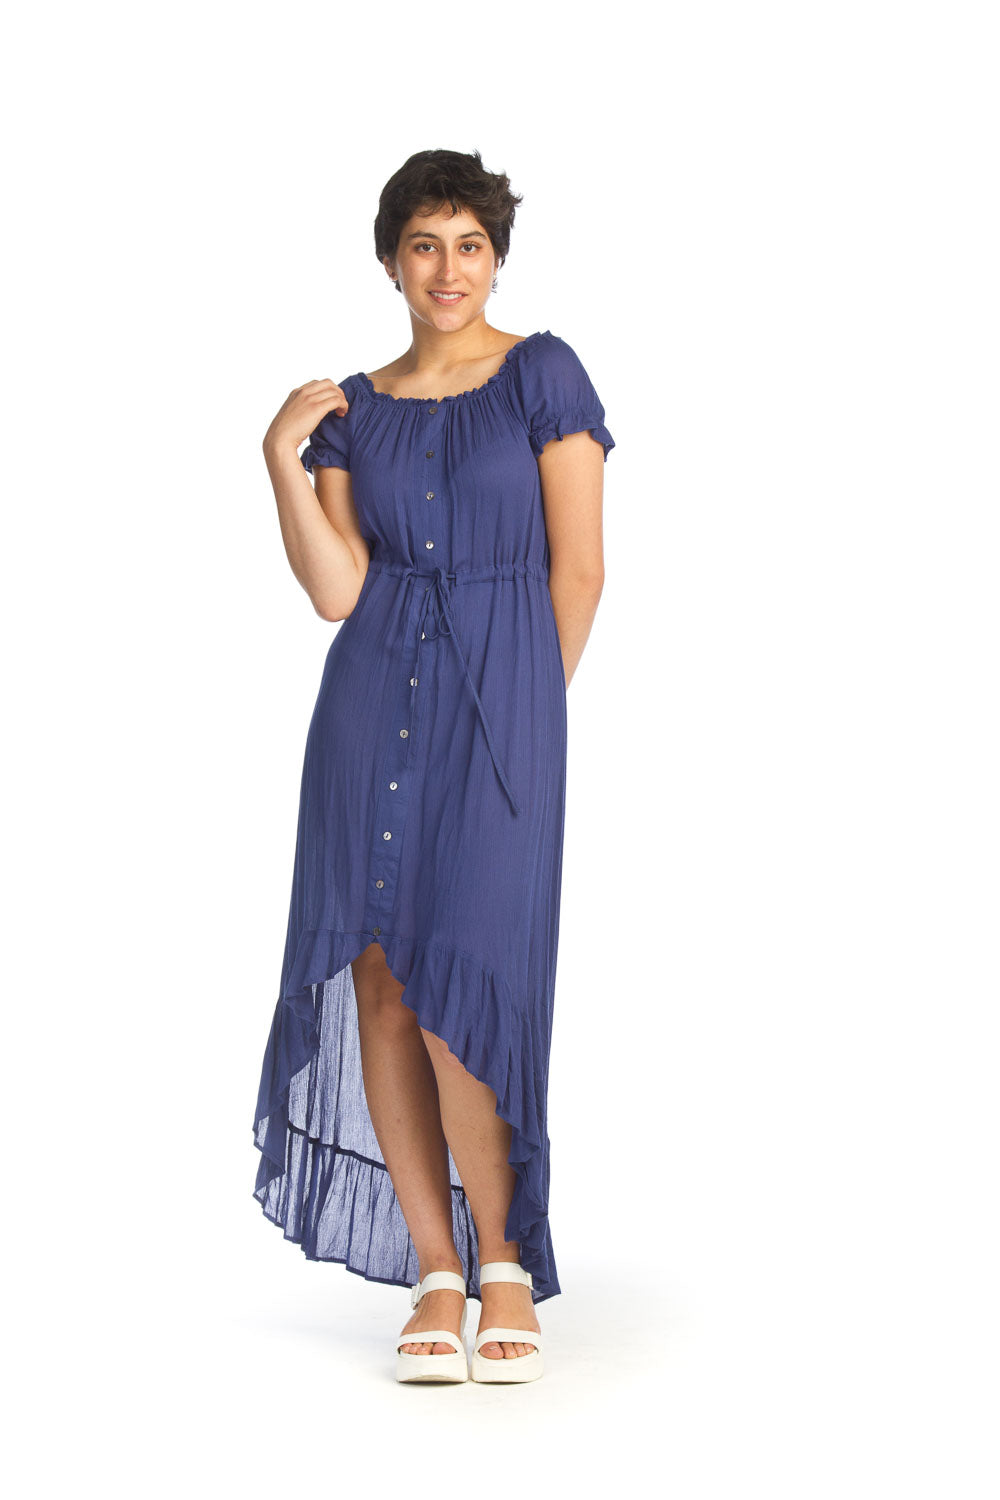 SALE Papillon PD14590 Blue OTS Short Sleeve High Low Maxi Dress